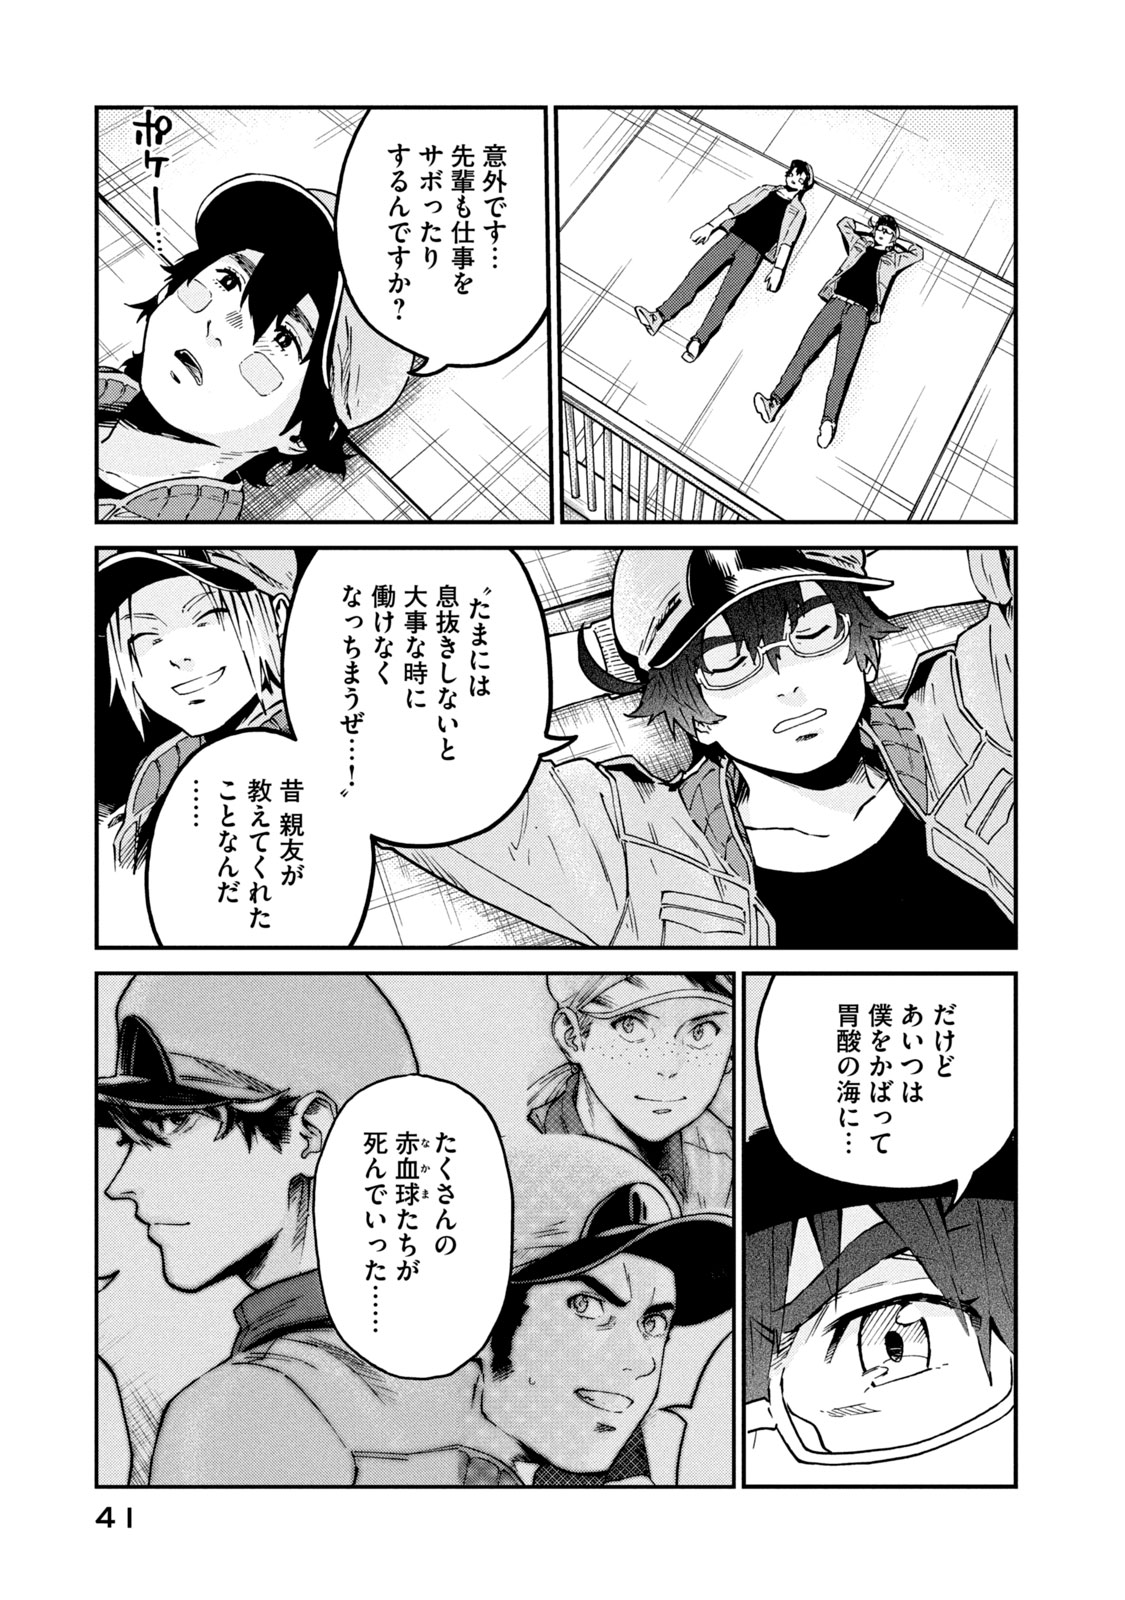 Hataraku Saibou BLACK - Chapter 43 - Page 17